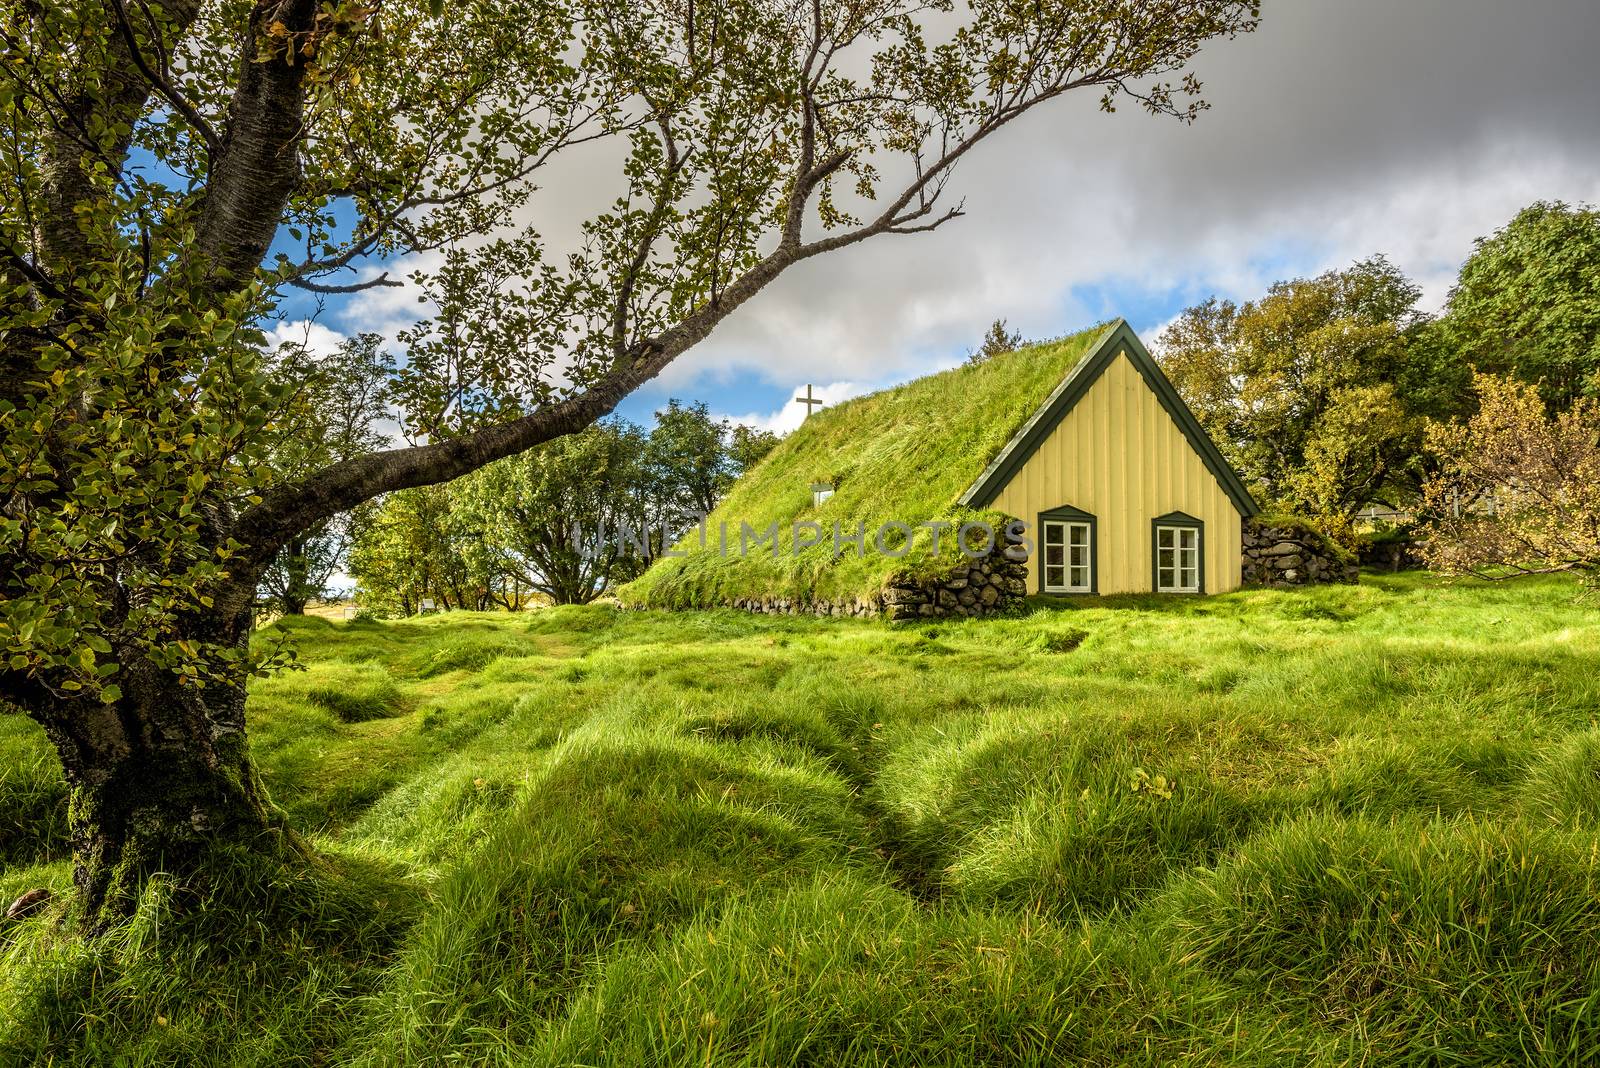 Turf Church in icelandic village of Hof, Skaftafell Iceland by nickfox